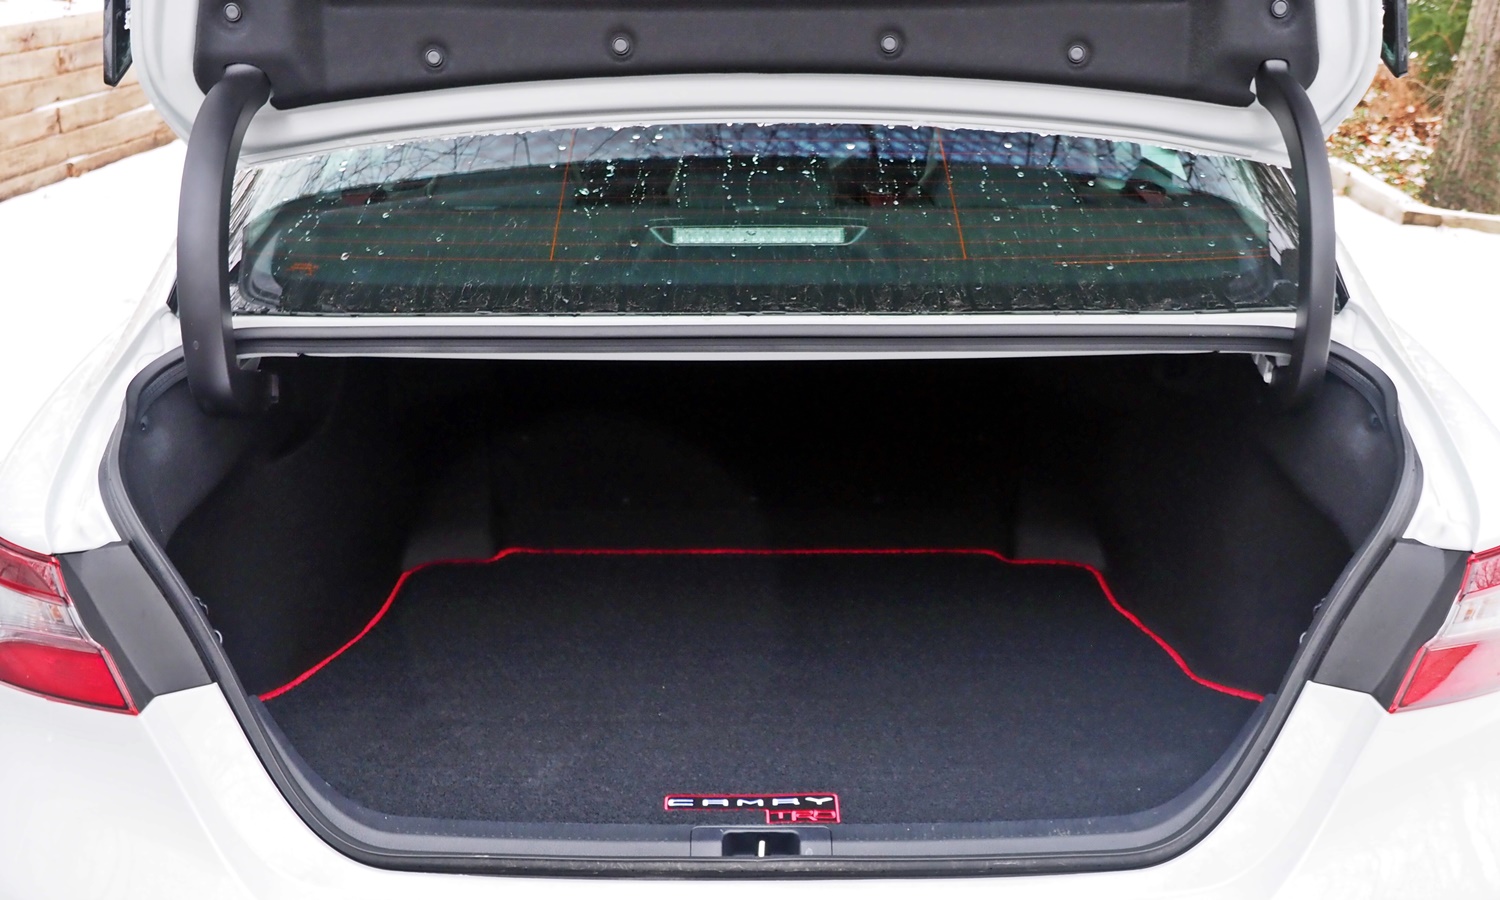 Camry Reviews: Toyota Camry TRD trunk